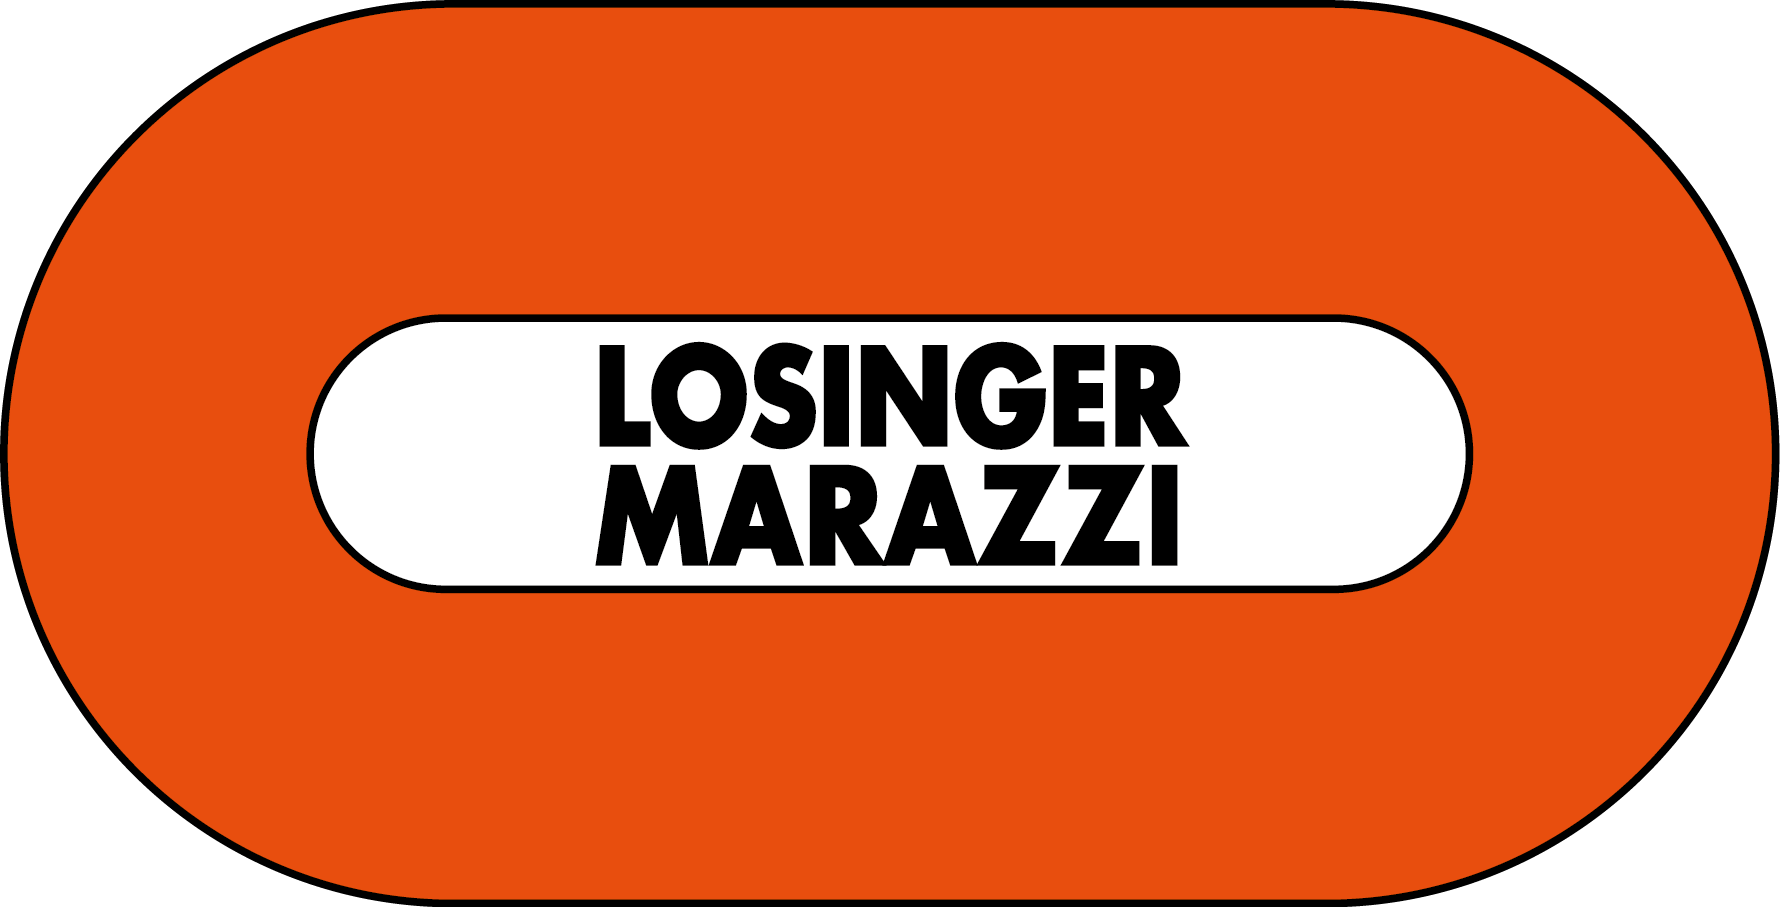 Losinger Marazzi logo